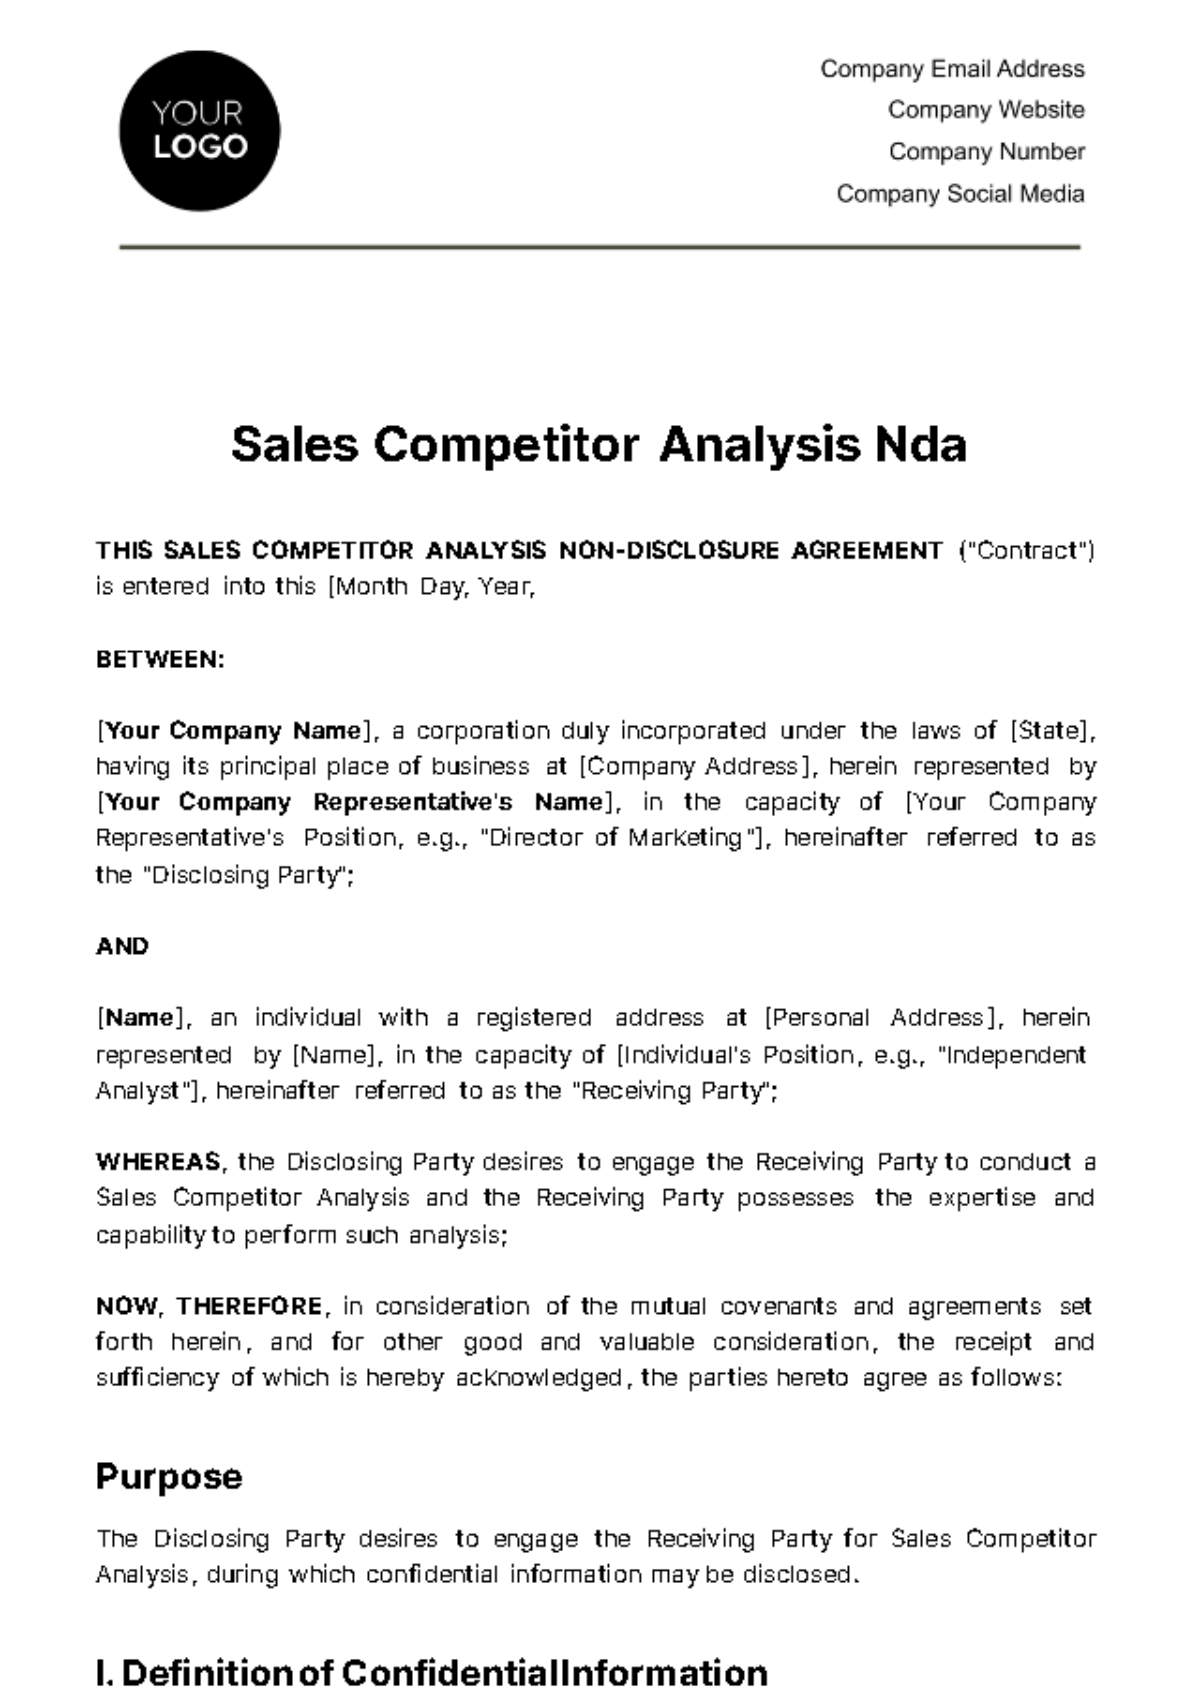 Free Sales Competitor Analysis NDA Template